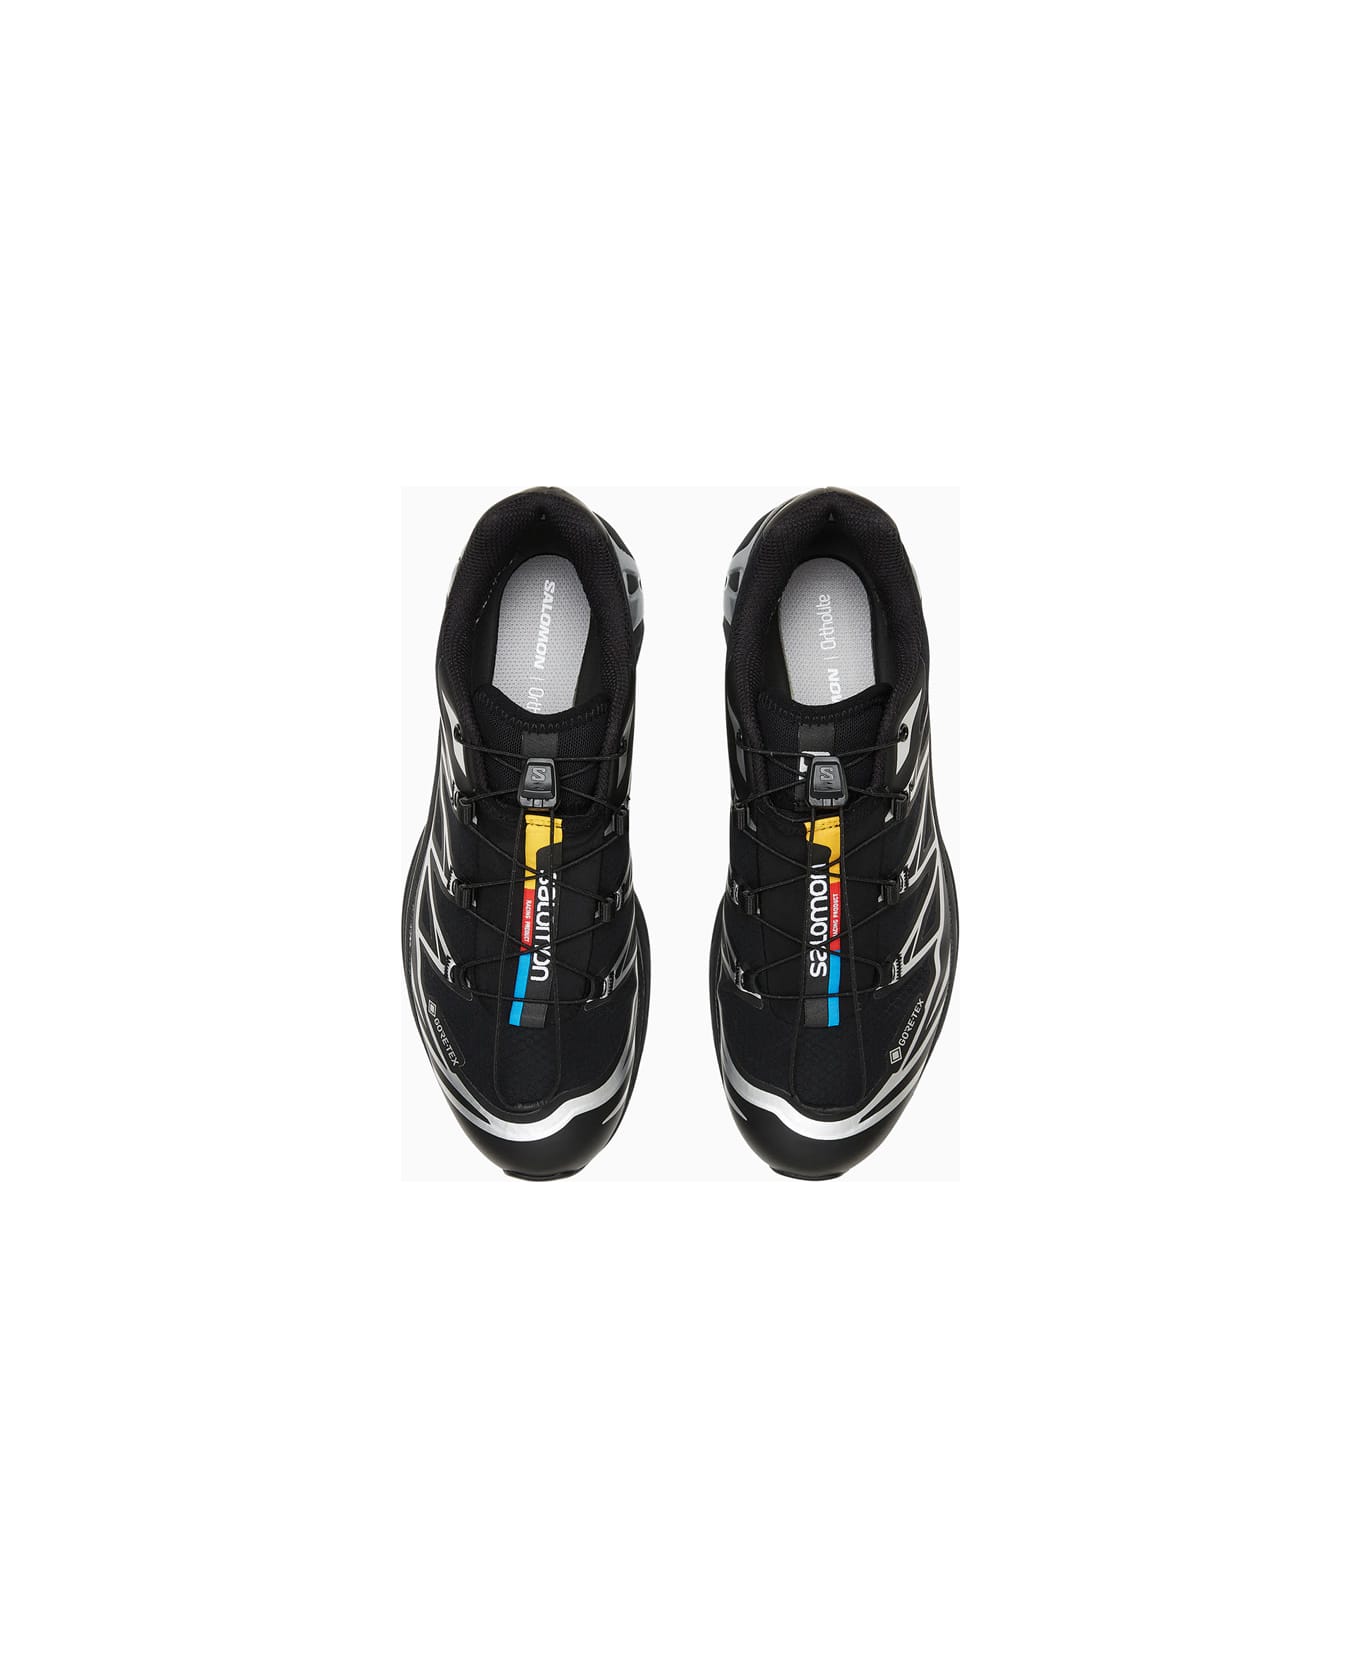 Salomon S-lab Xt-6 Gore-tex Sneakers L47450600 - BLACK/SILVER スニーカー